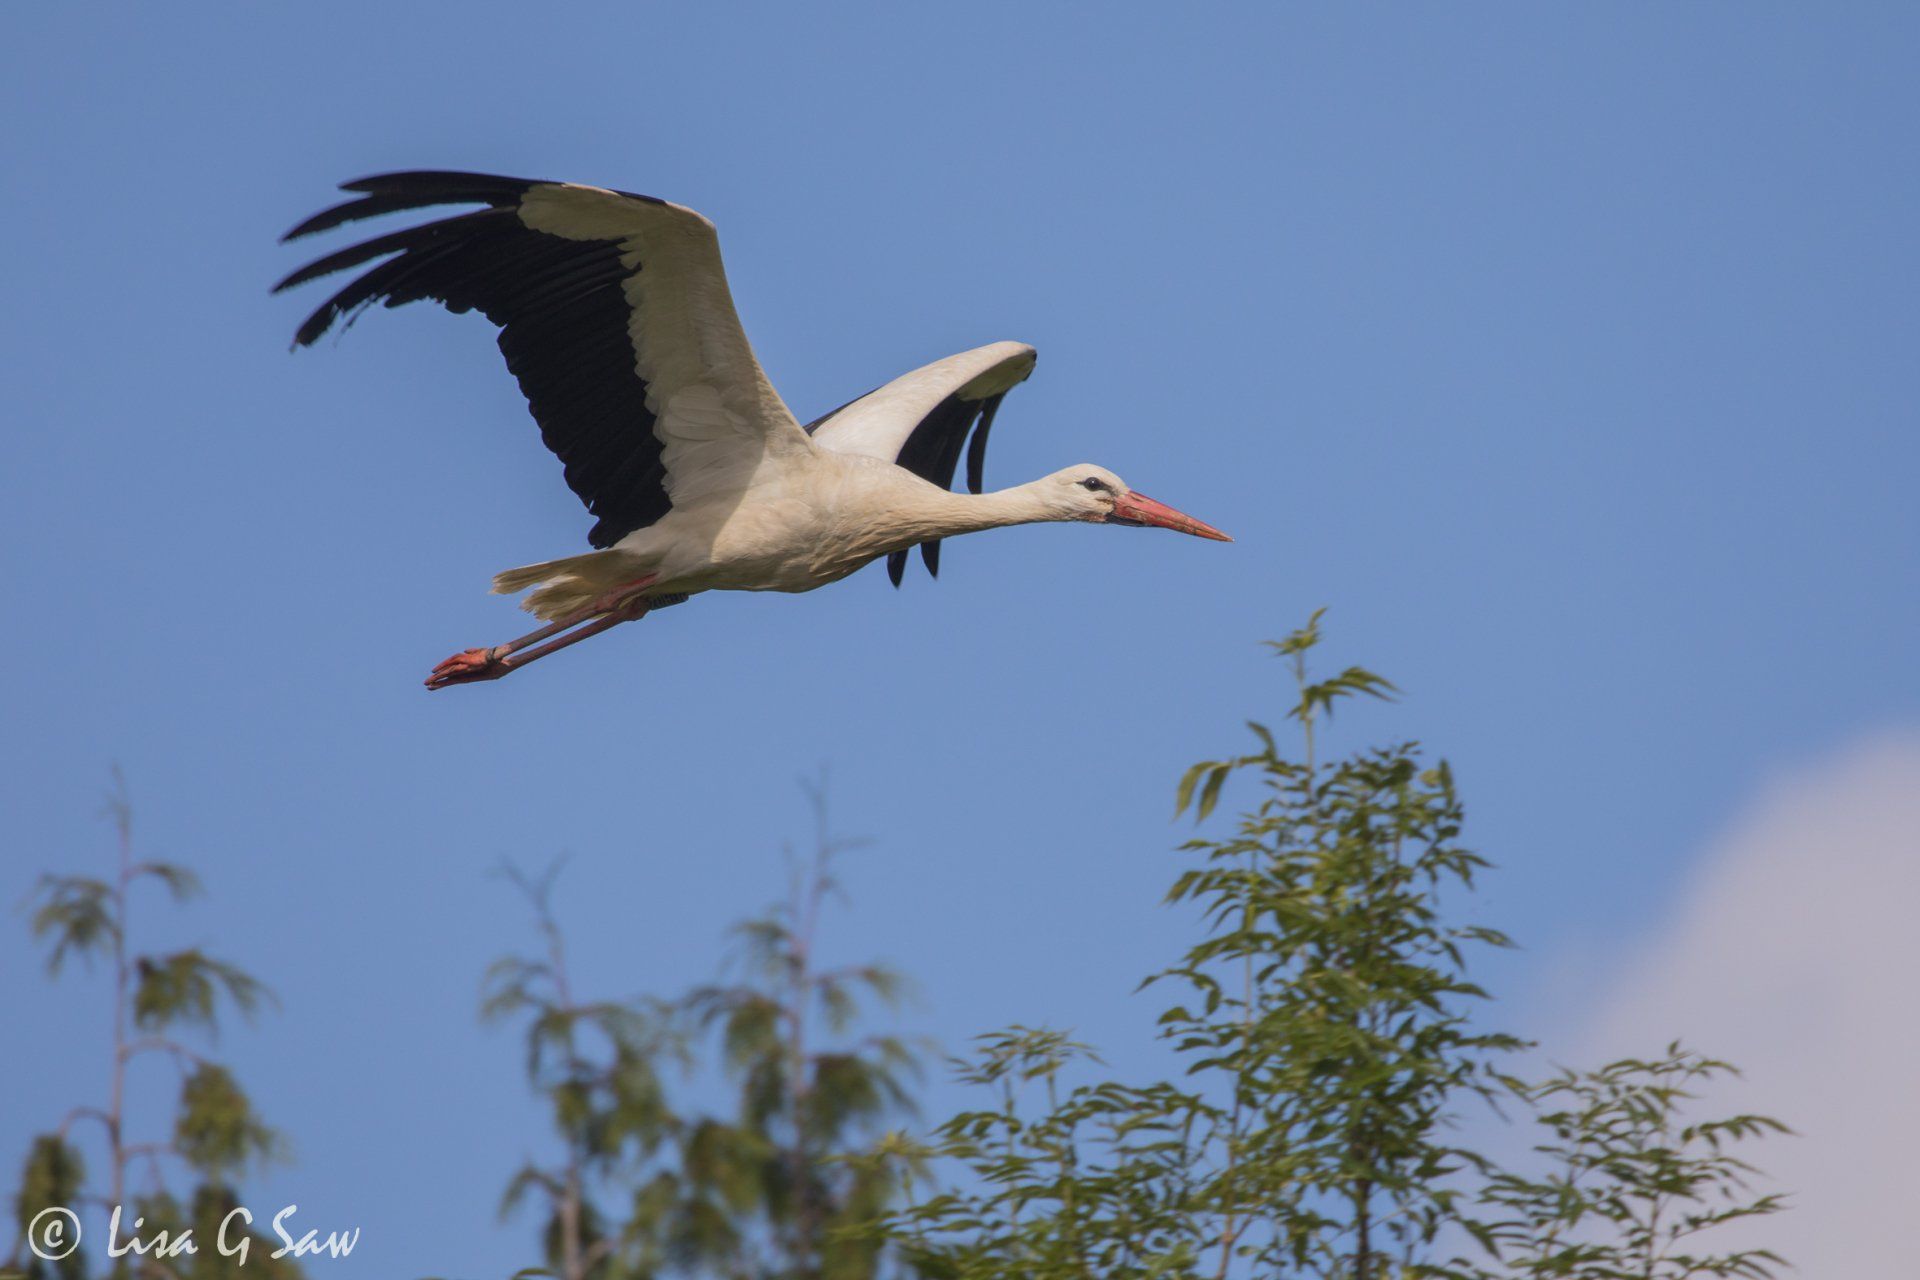 Adult White Stork flying above tree tops